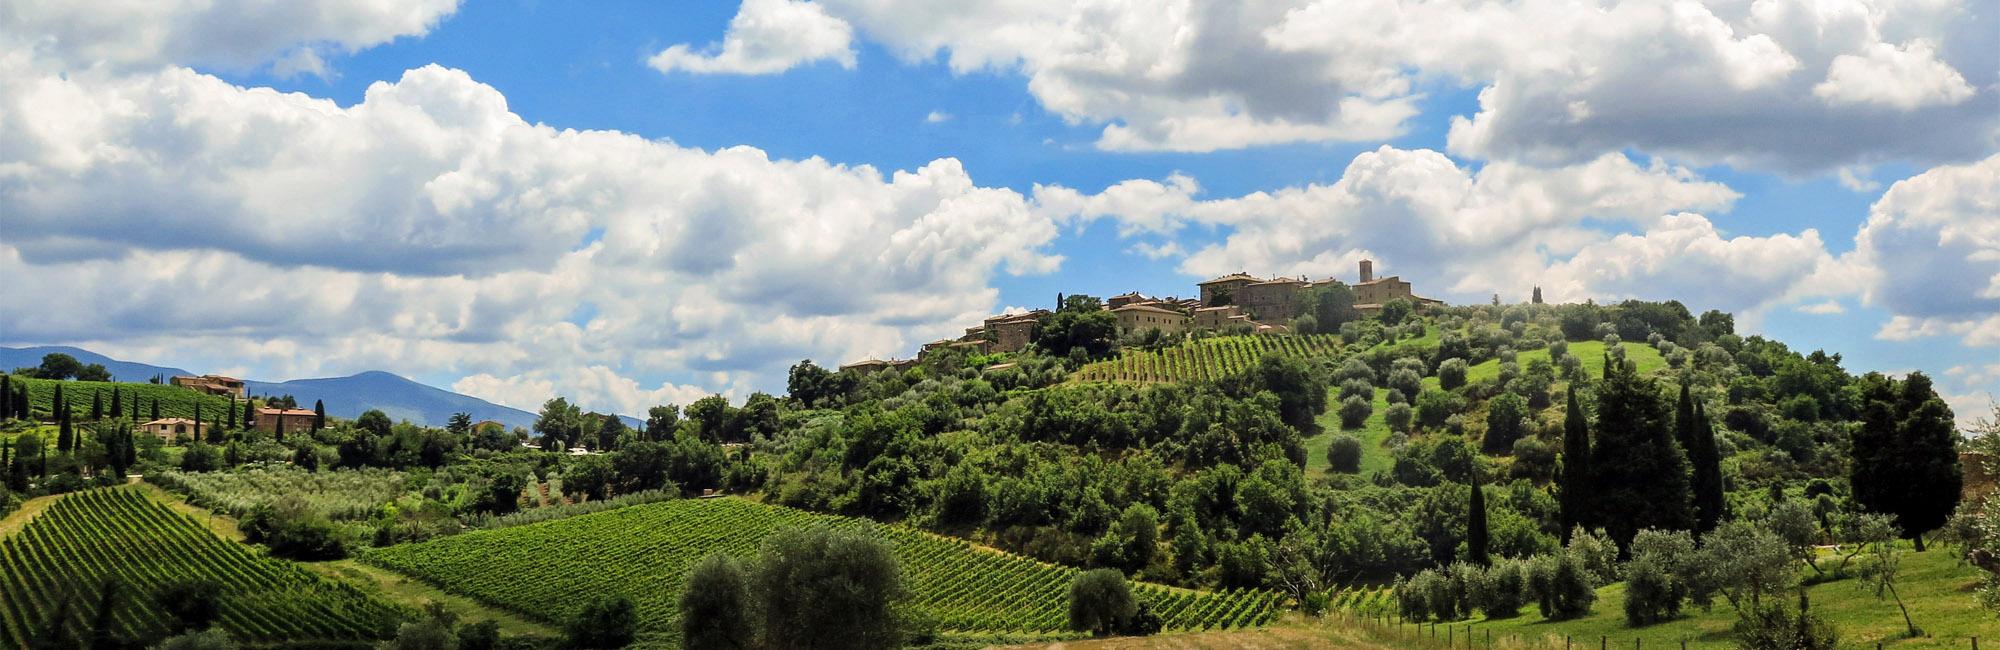 Paisaje de viñedos de La Toscana